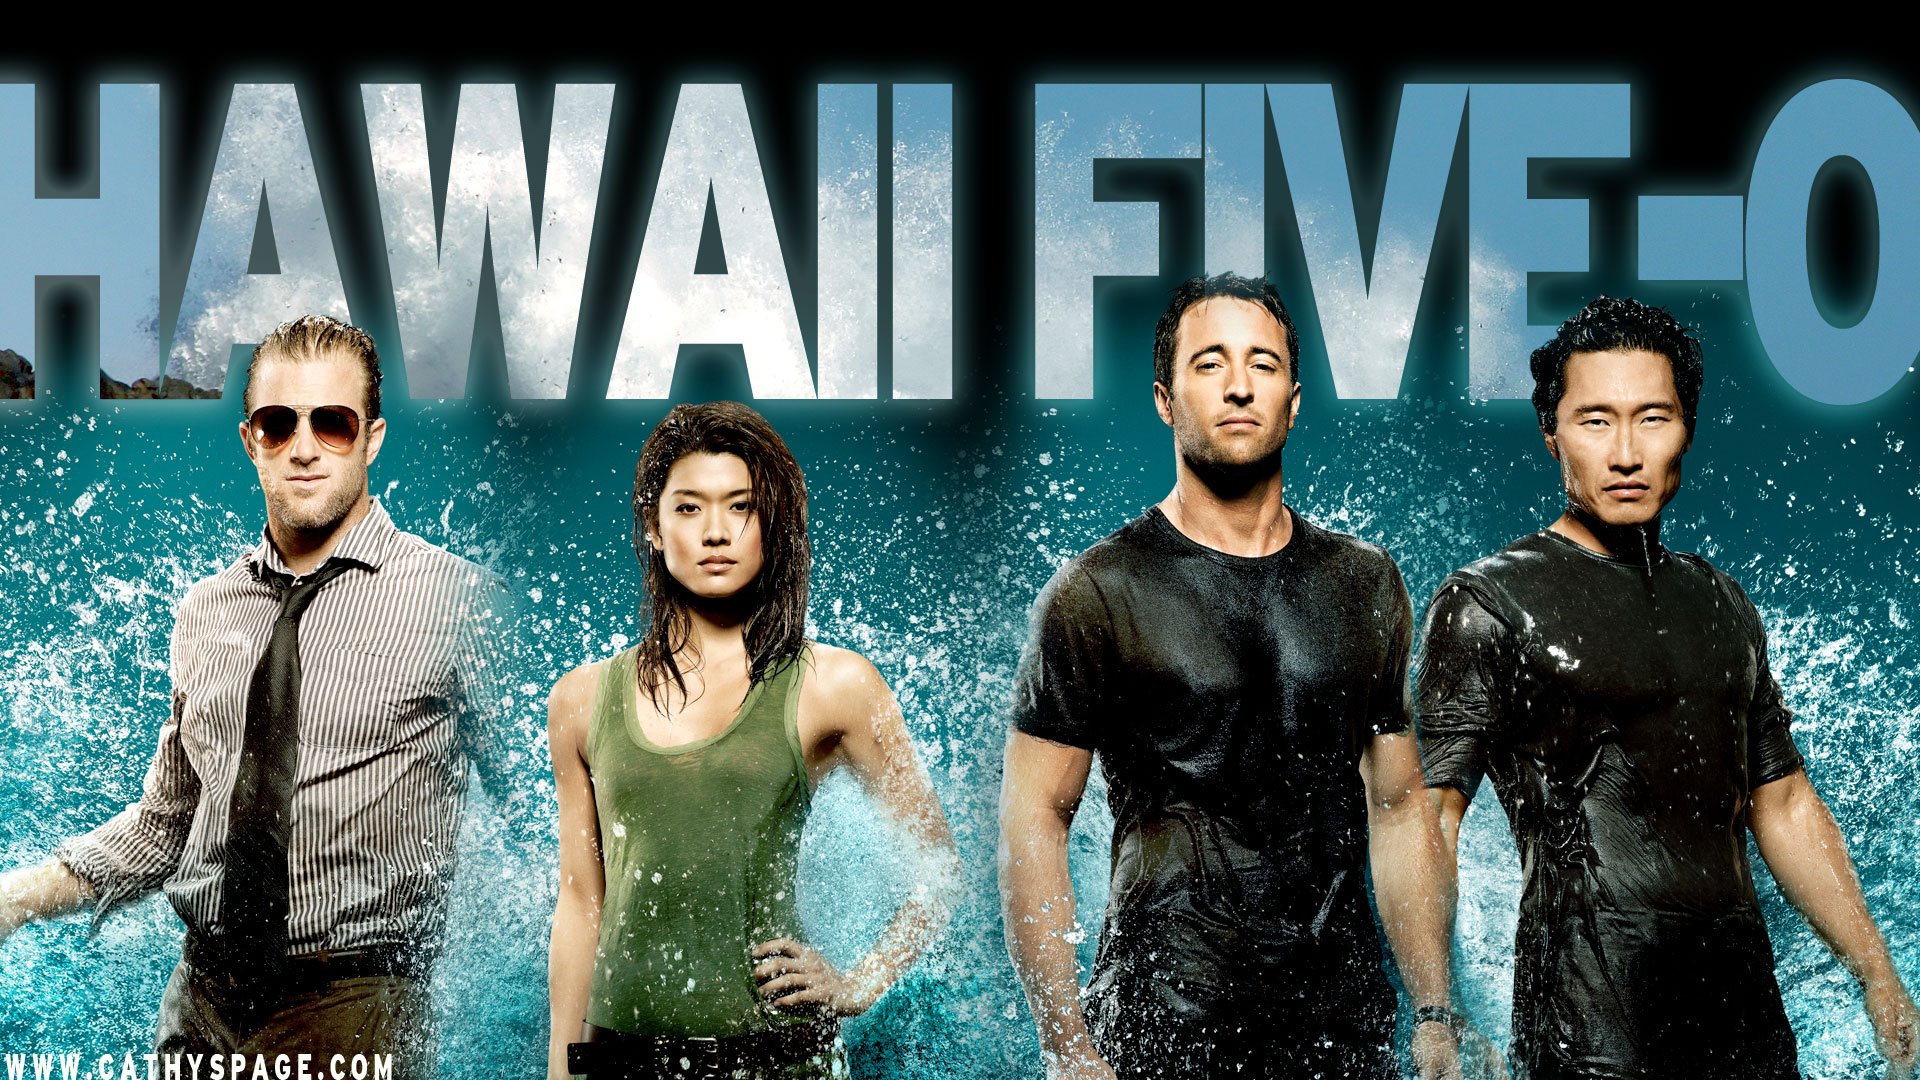 HAWAII FIVE 0 action crime drama wallpaper 1920x1080 405099